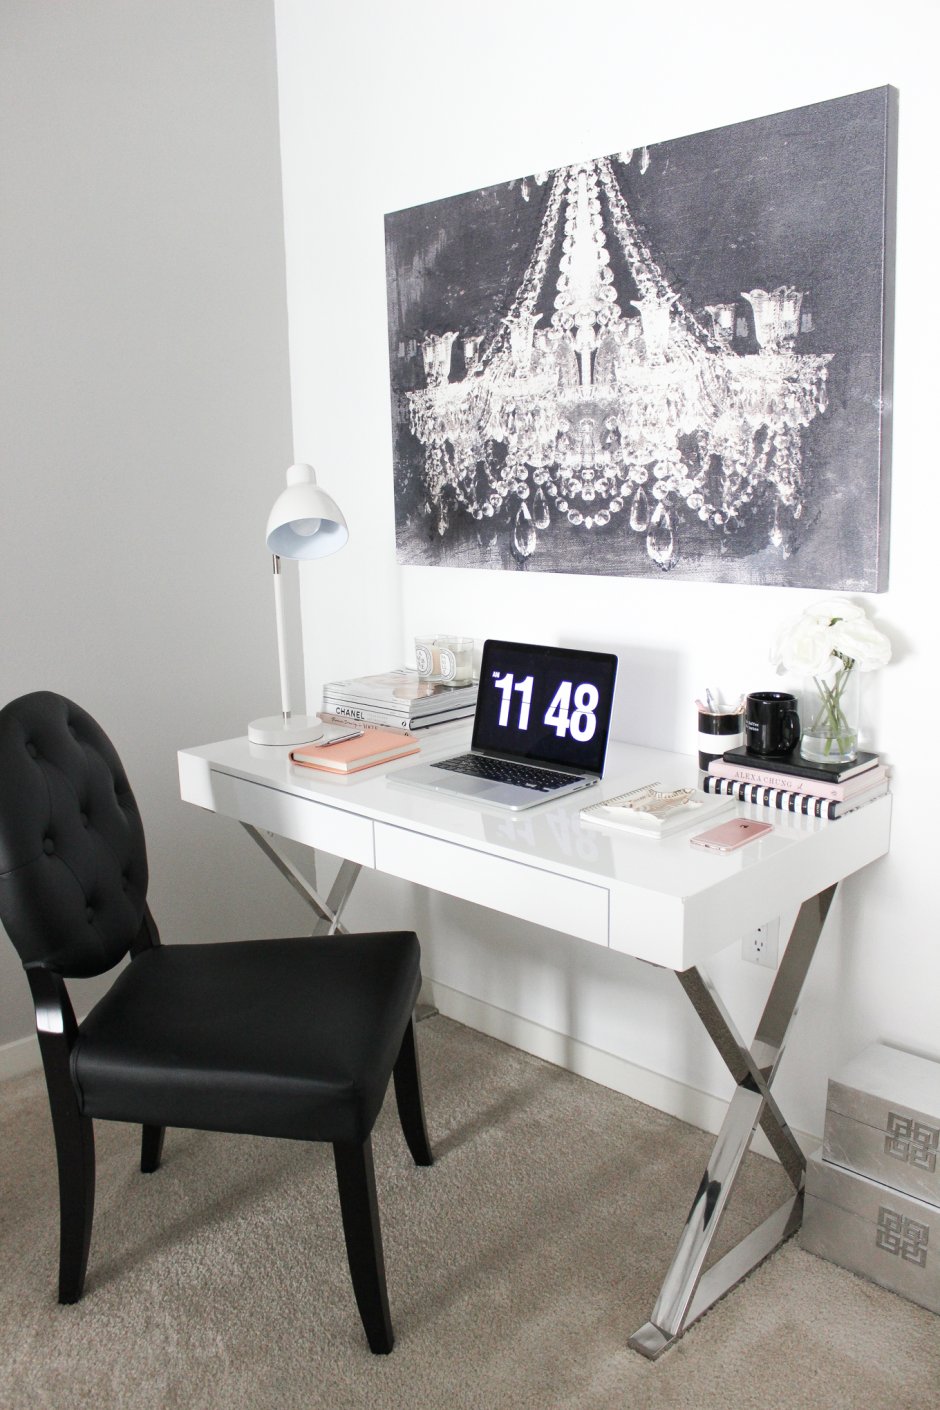 Dream Desk в черно-розовом стиле